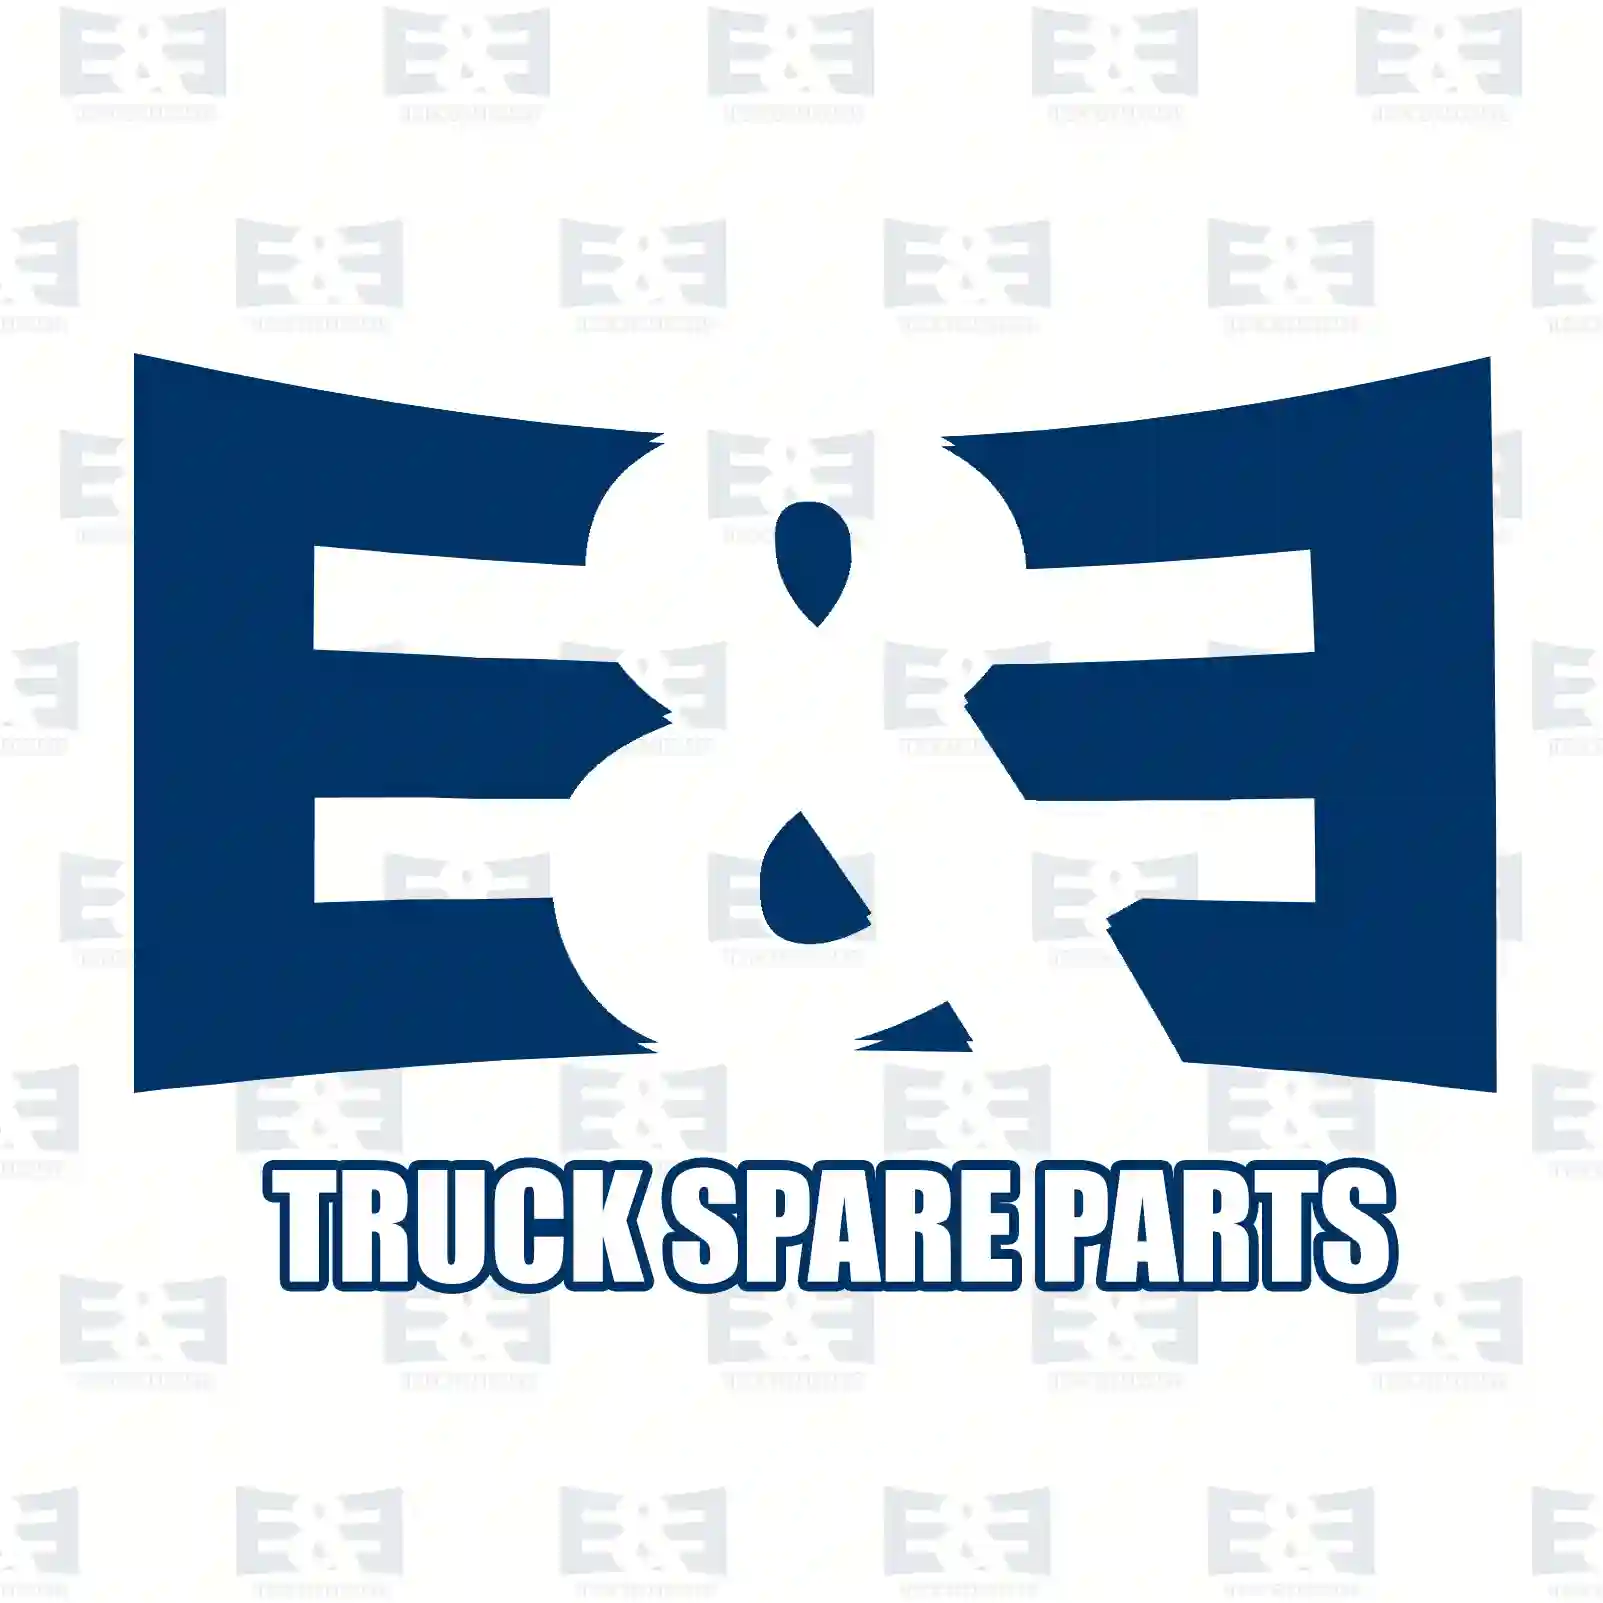 Air Tank Air tank, EE No 2E2294796 ,  oem no:1519220, 5801478284, 5021170384, , E&E Truck Spare Parts | Truck Spare Parts, Auotomotive Spare Parts